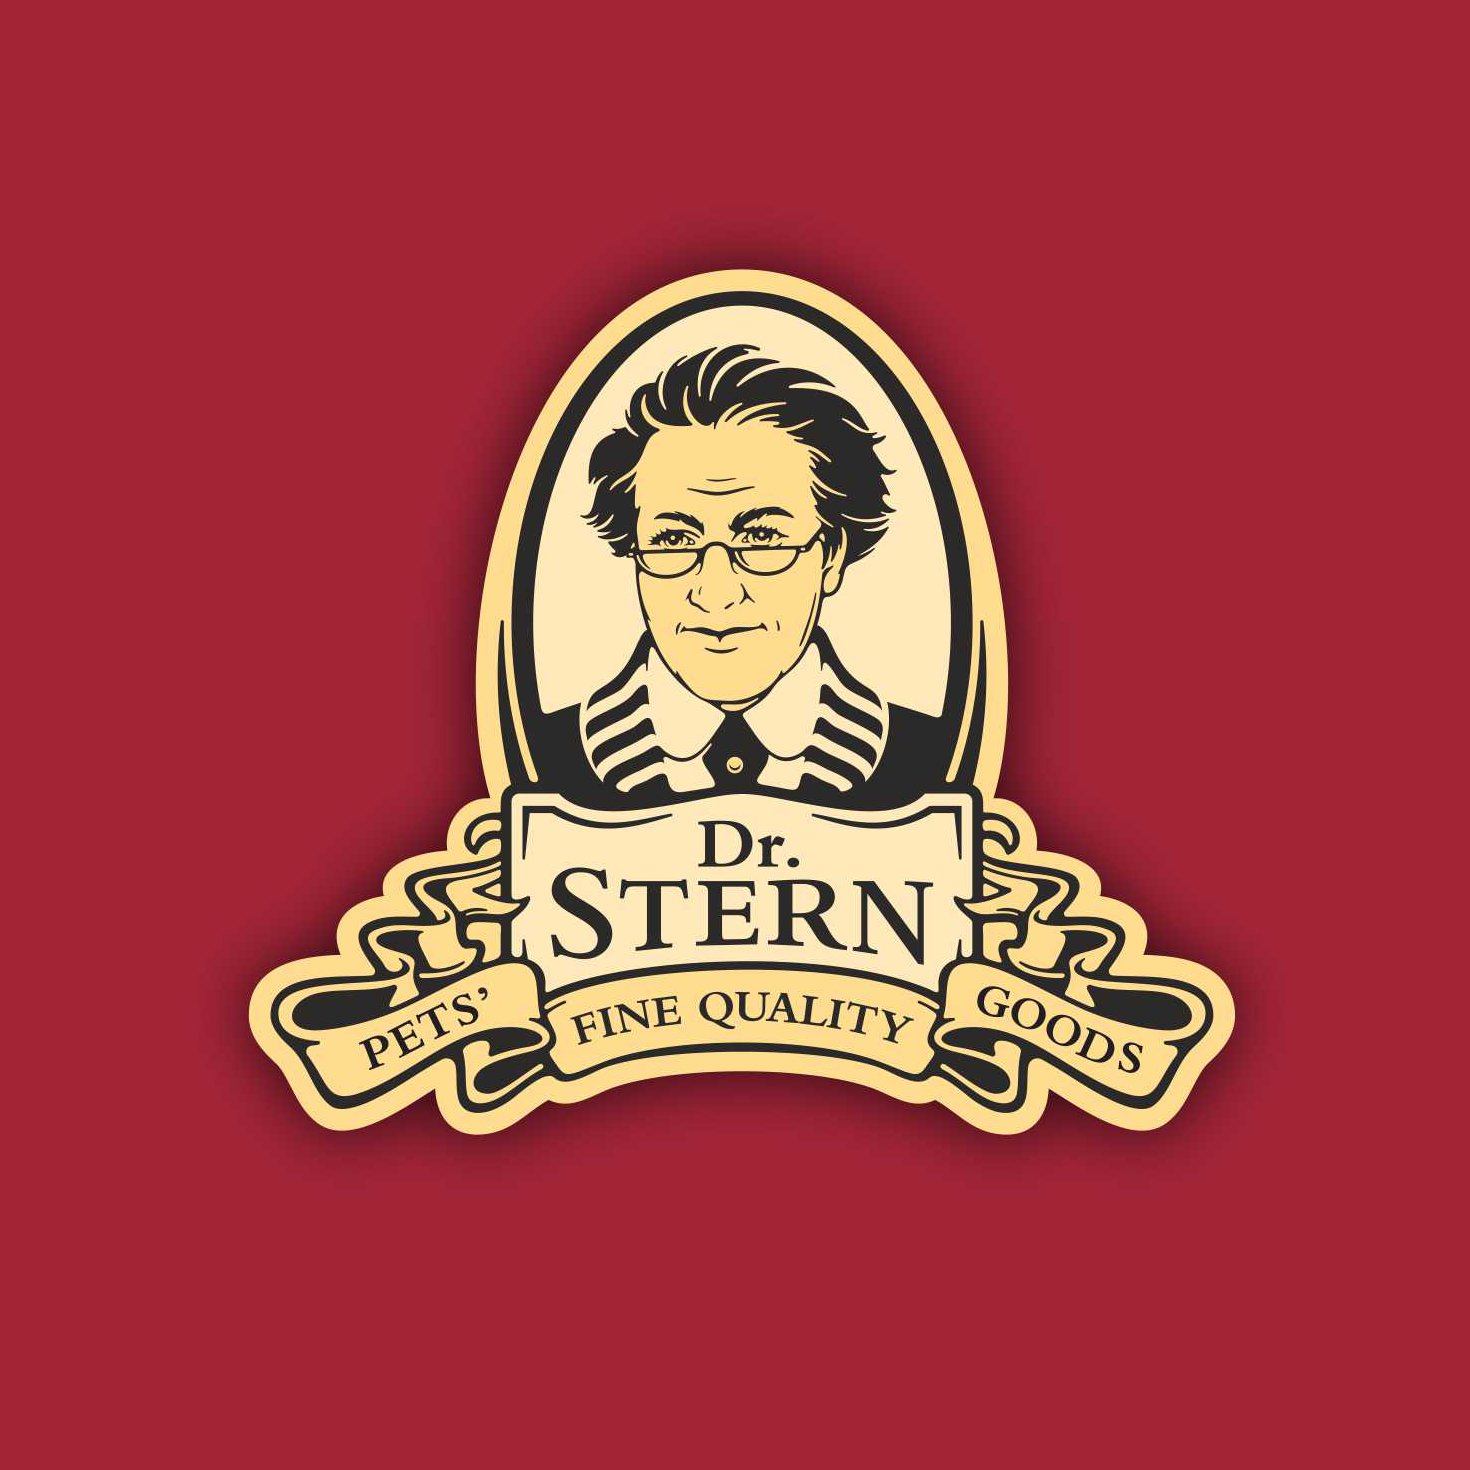 Dr.Stern